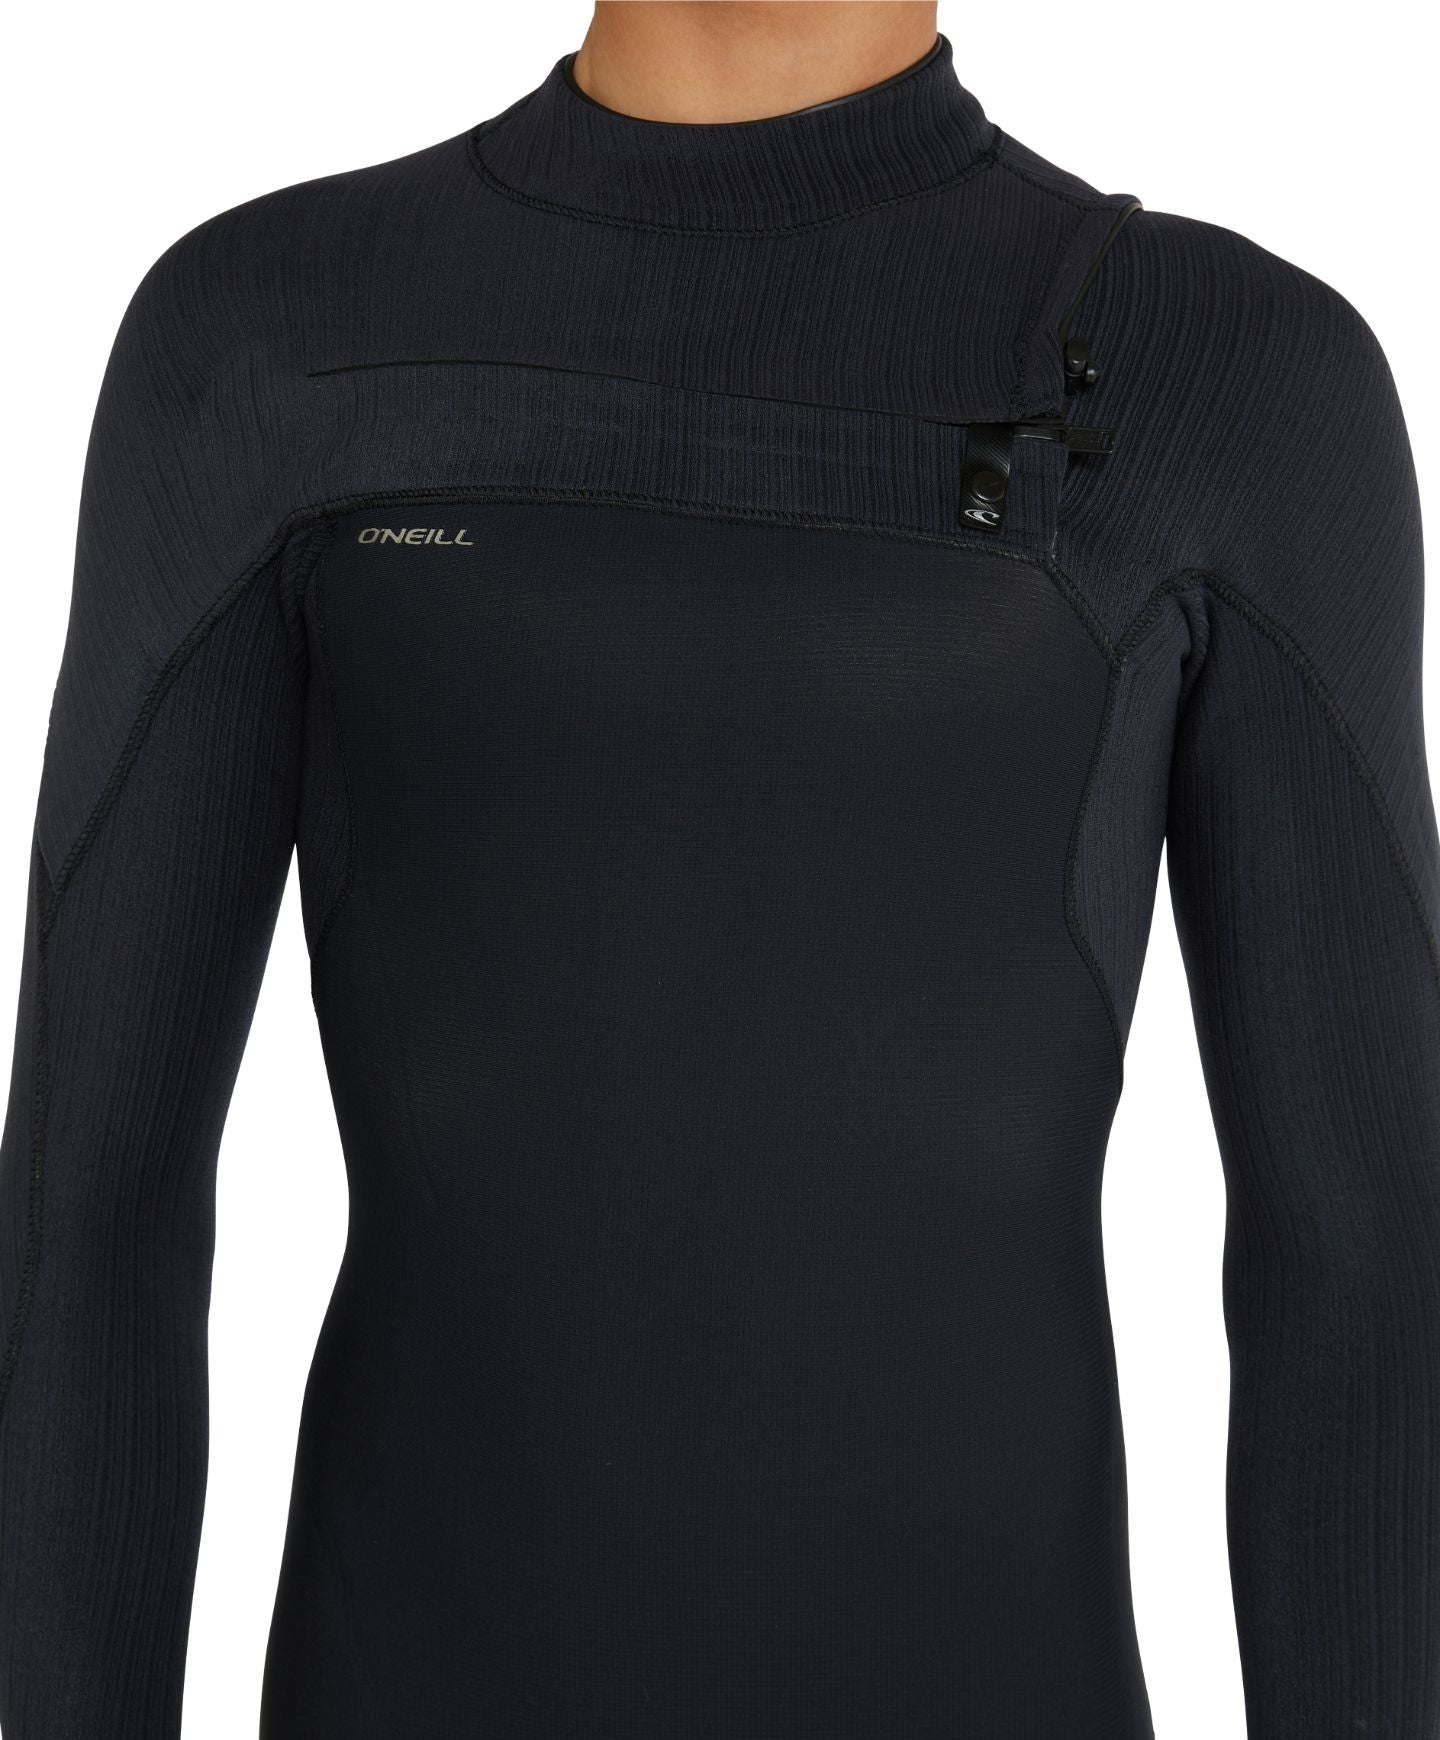 HyperFreak 3/2+ Steamer Chest Zip Wetsuit - Black